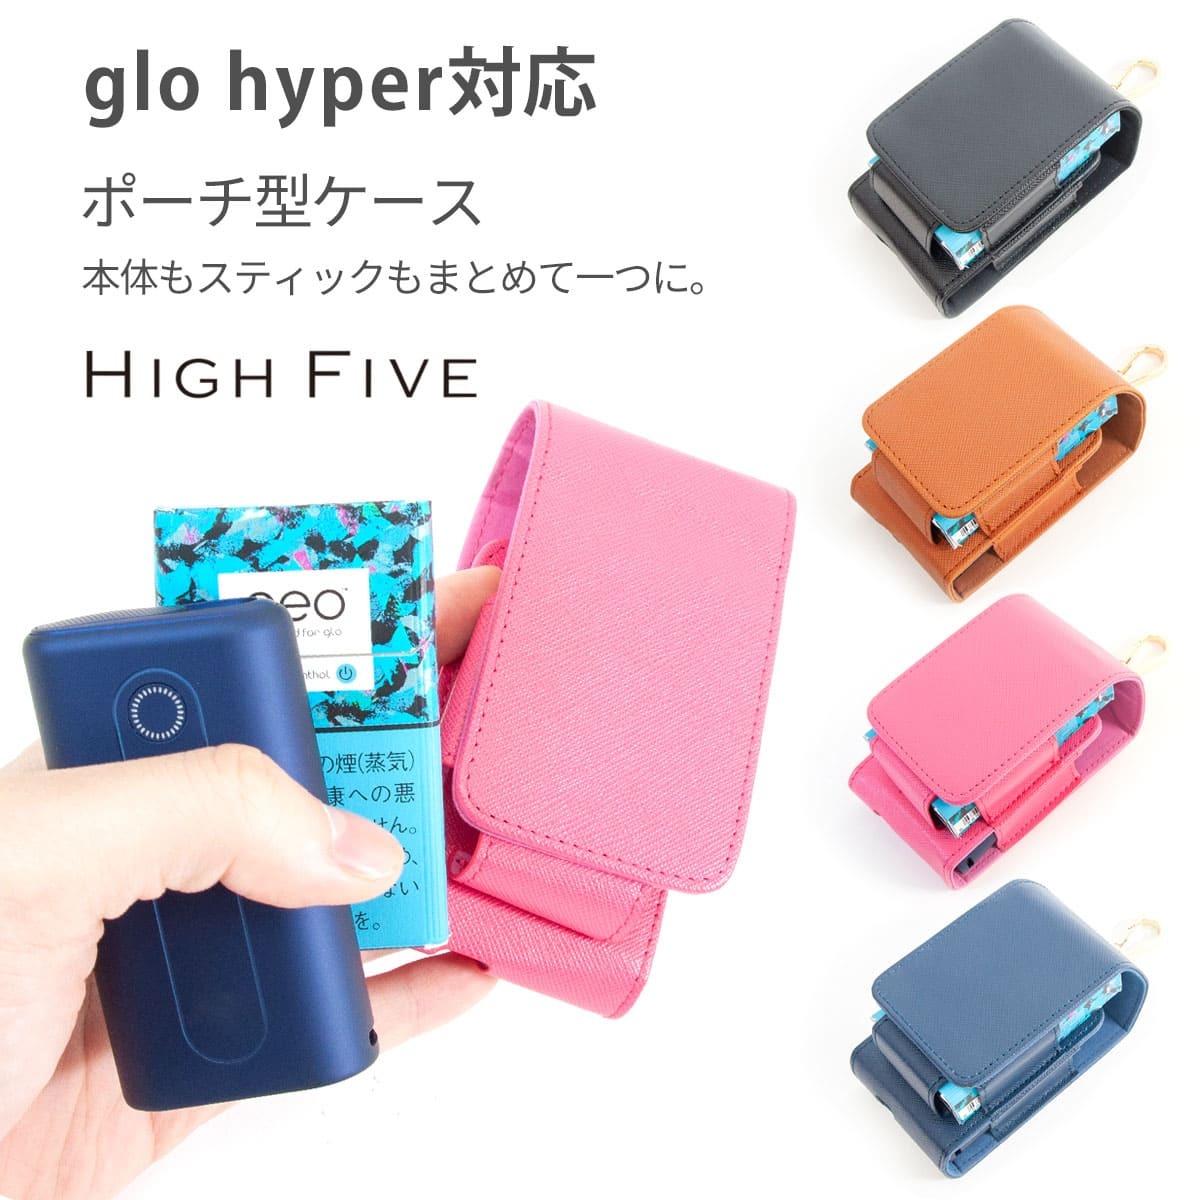 glo hyper 対応 ケース グローハイパー glo 対応 サフィアーノ レザー 革 カバー コンパクト スティック 収納 HIGHFIVE  ブランド ギフト 対応